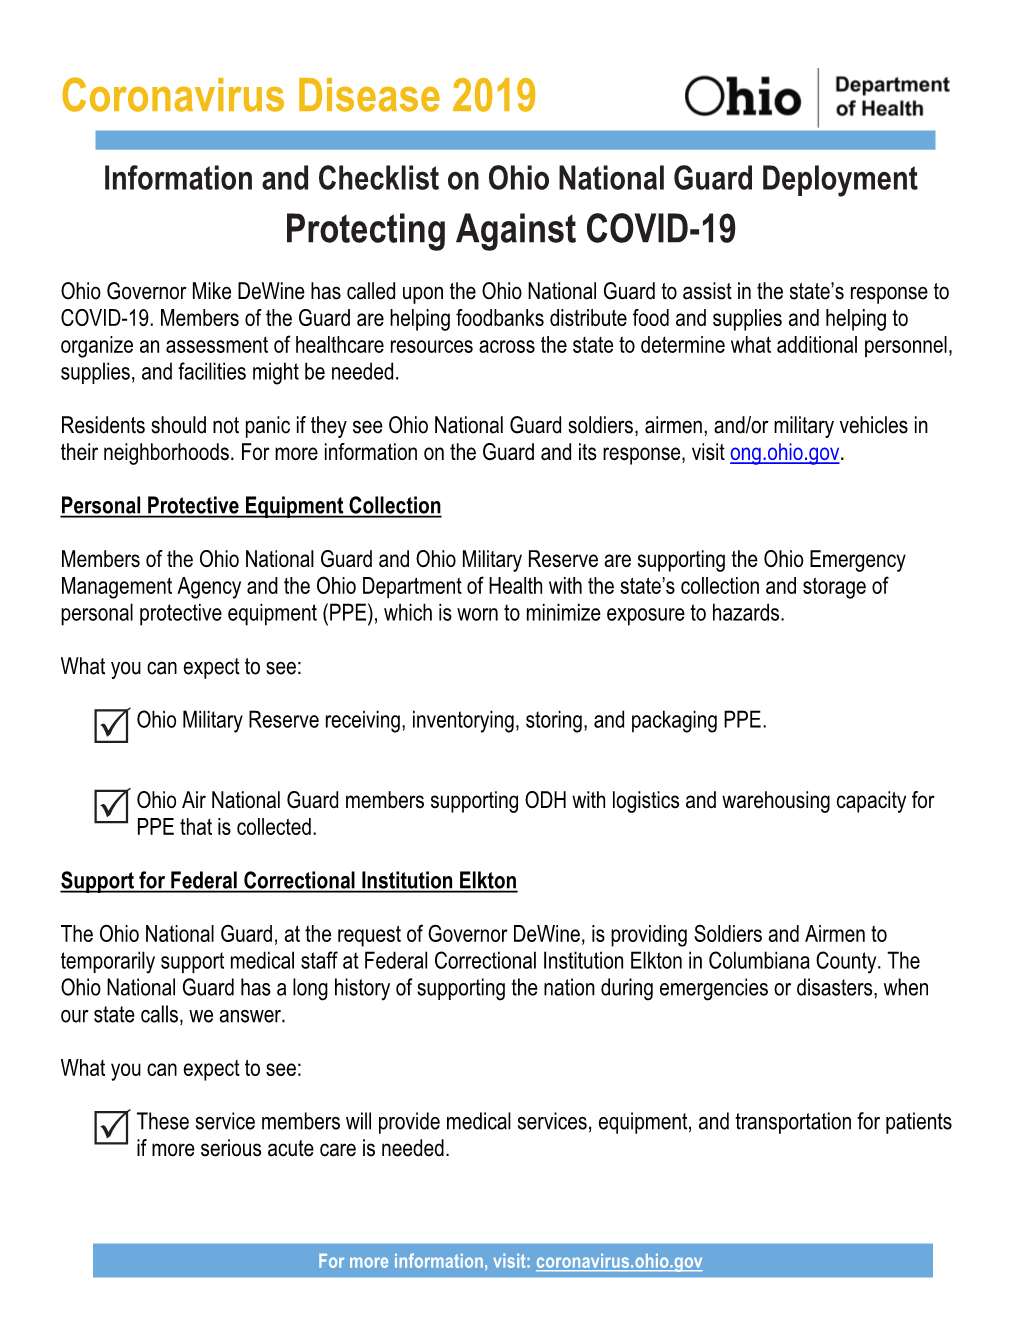 Coronavirus Disease 2019 Information and Checklist on Ohio